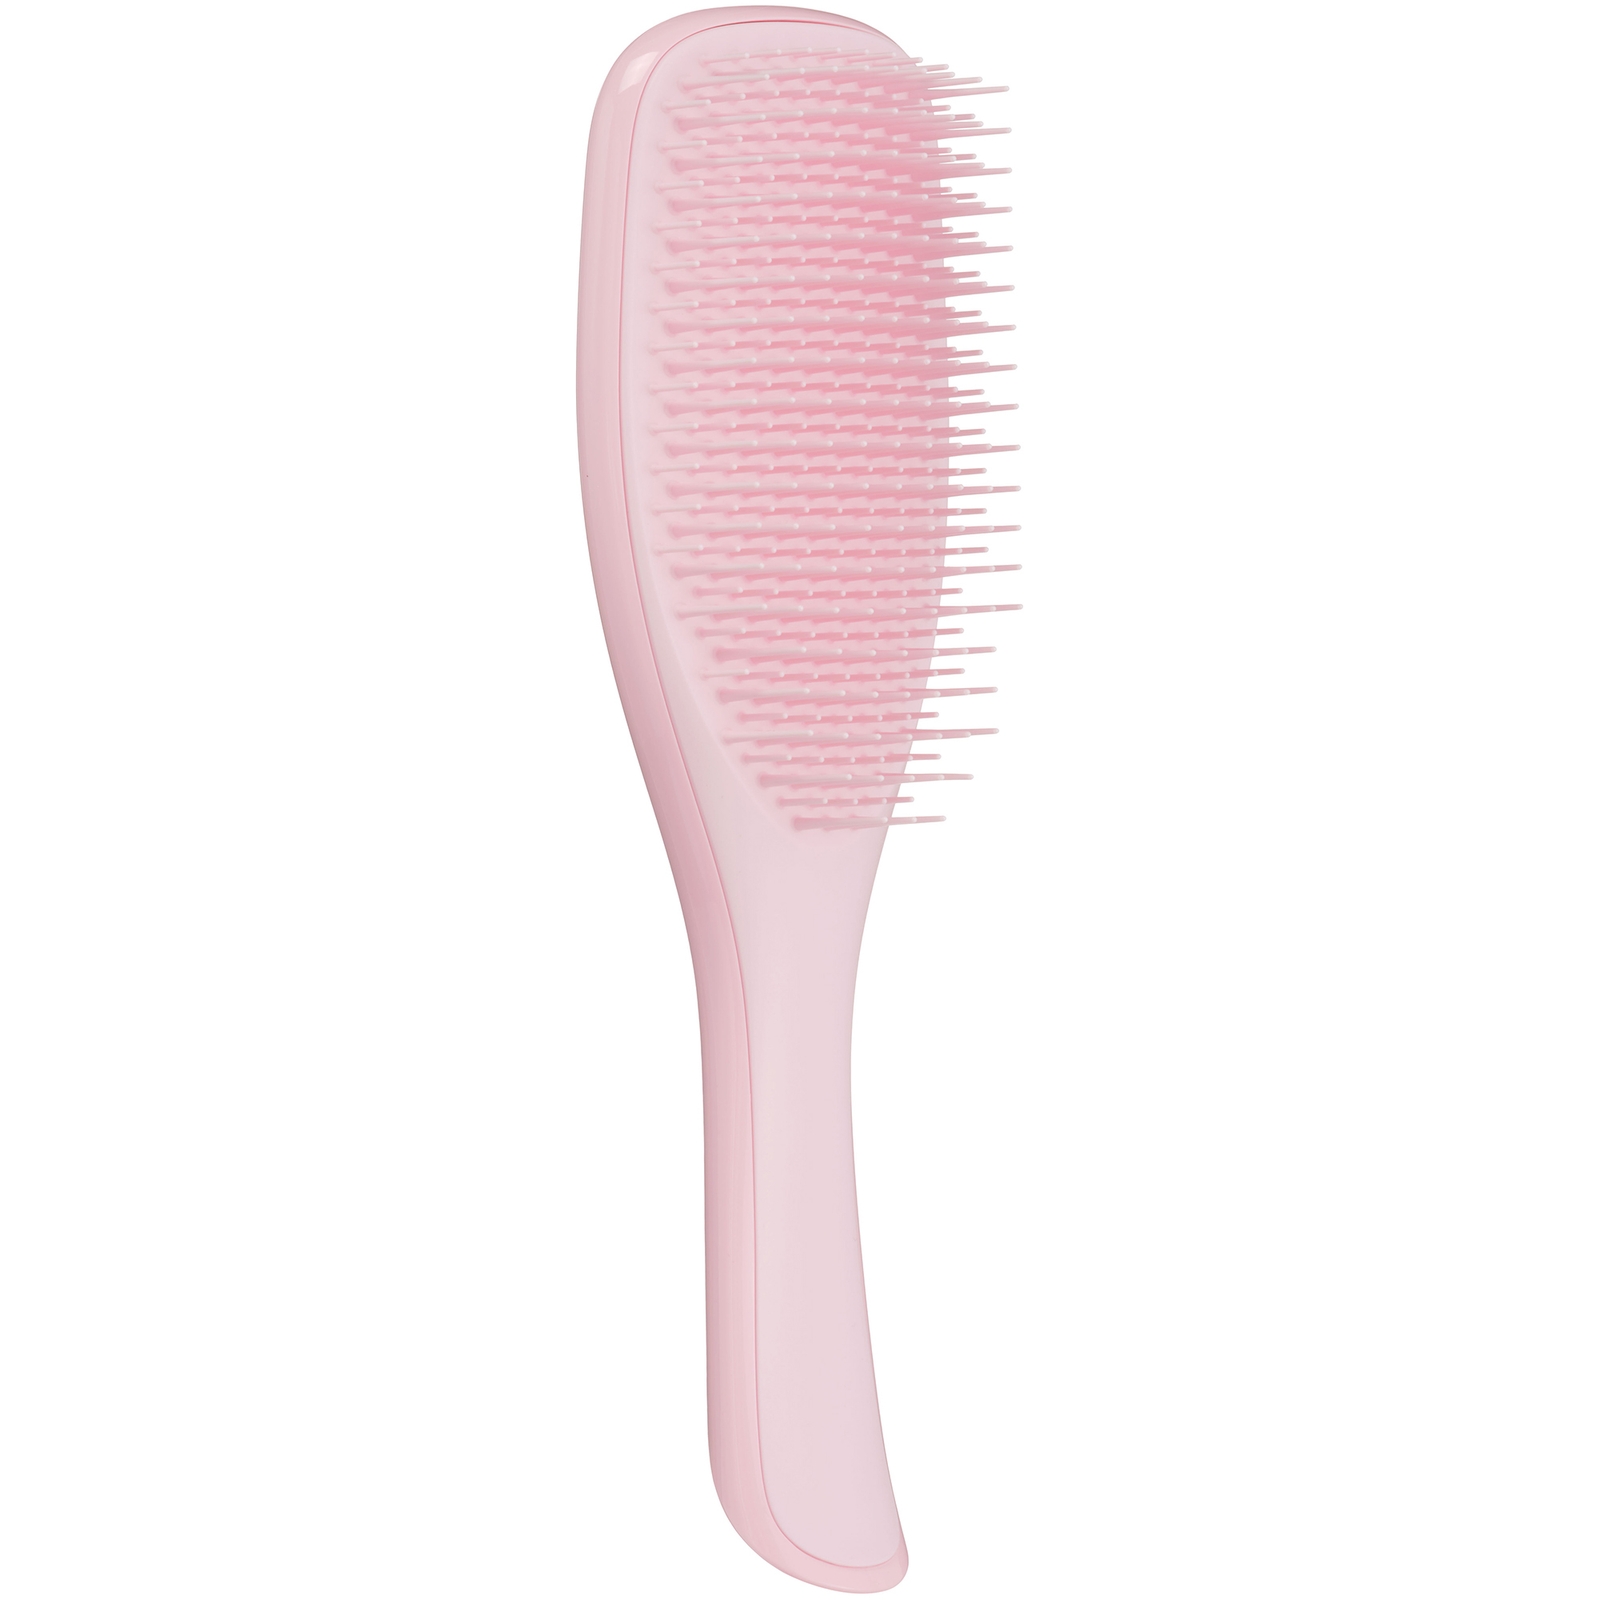 Image of Tangle Teezer The Wet Detangler spazzola districante per capelli bagnati - Millennial Pink